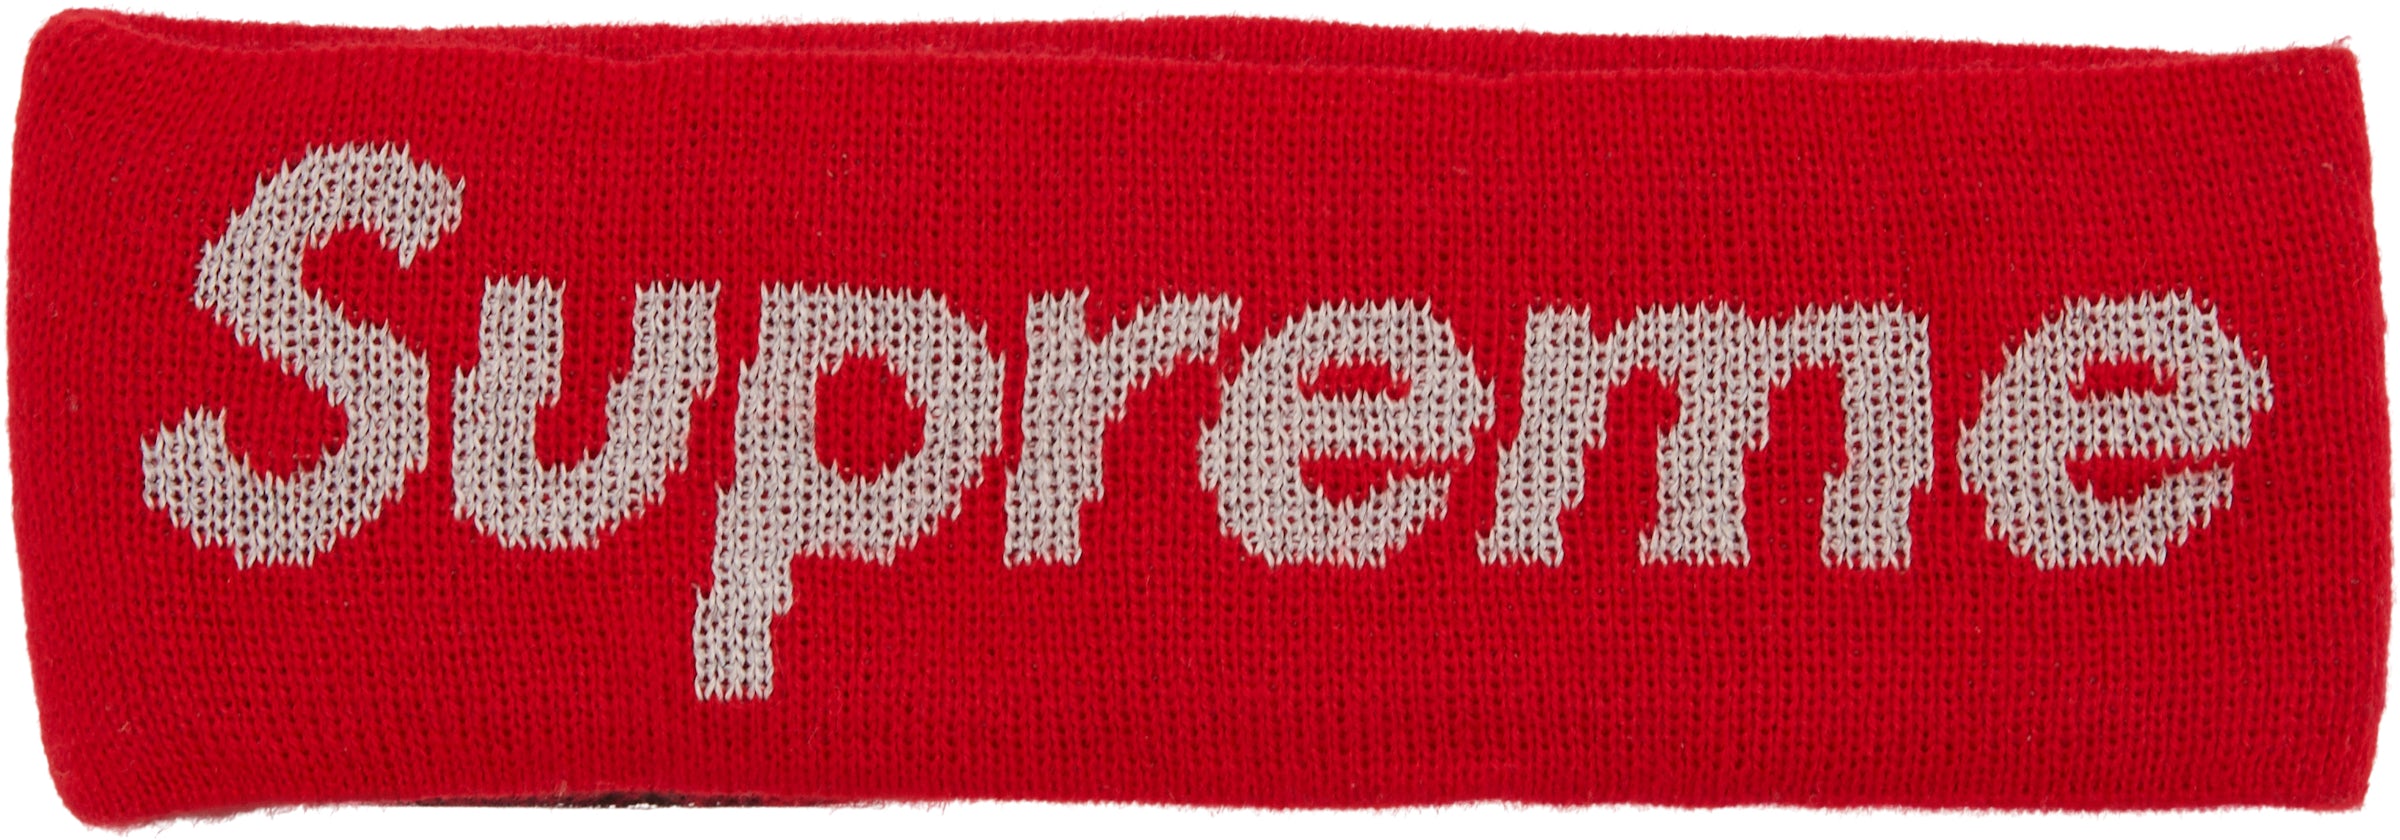 Supreme New Era Reflective Logo Headband (FW 17) Red